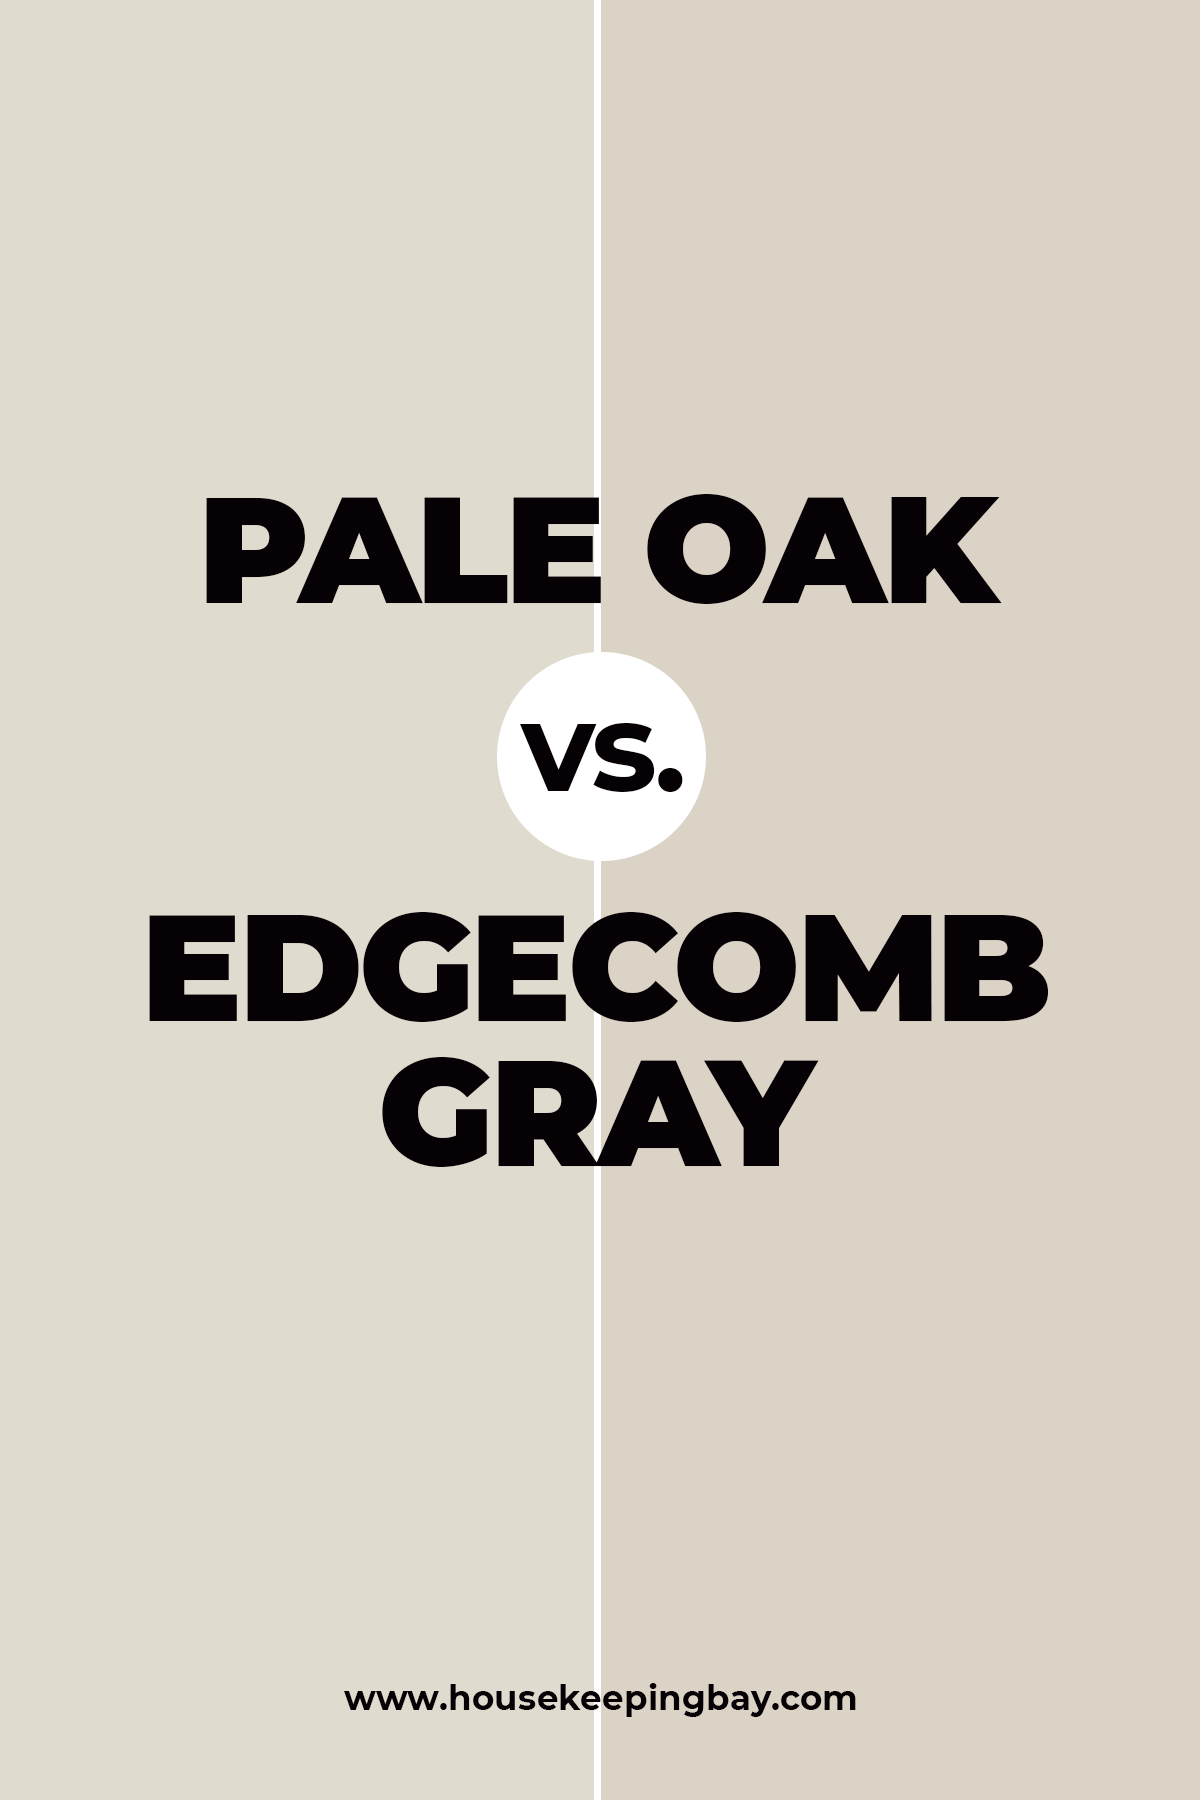 Pale Oak vs. Edgecomb Gray